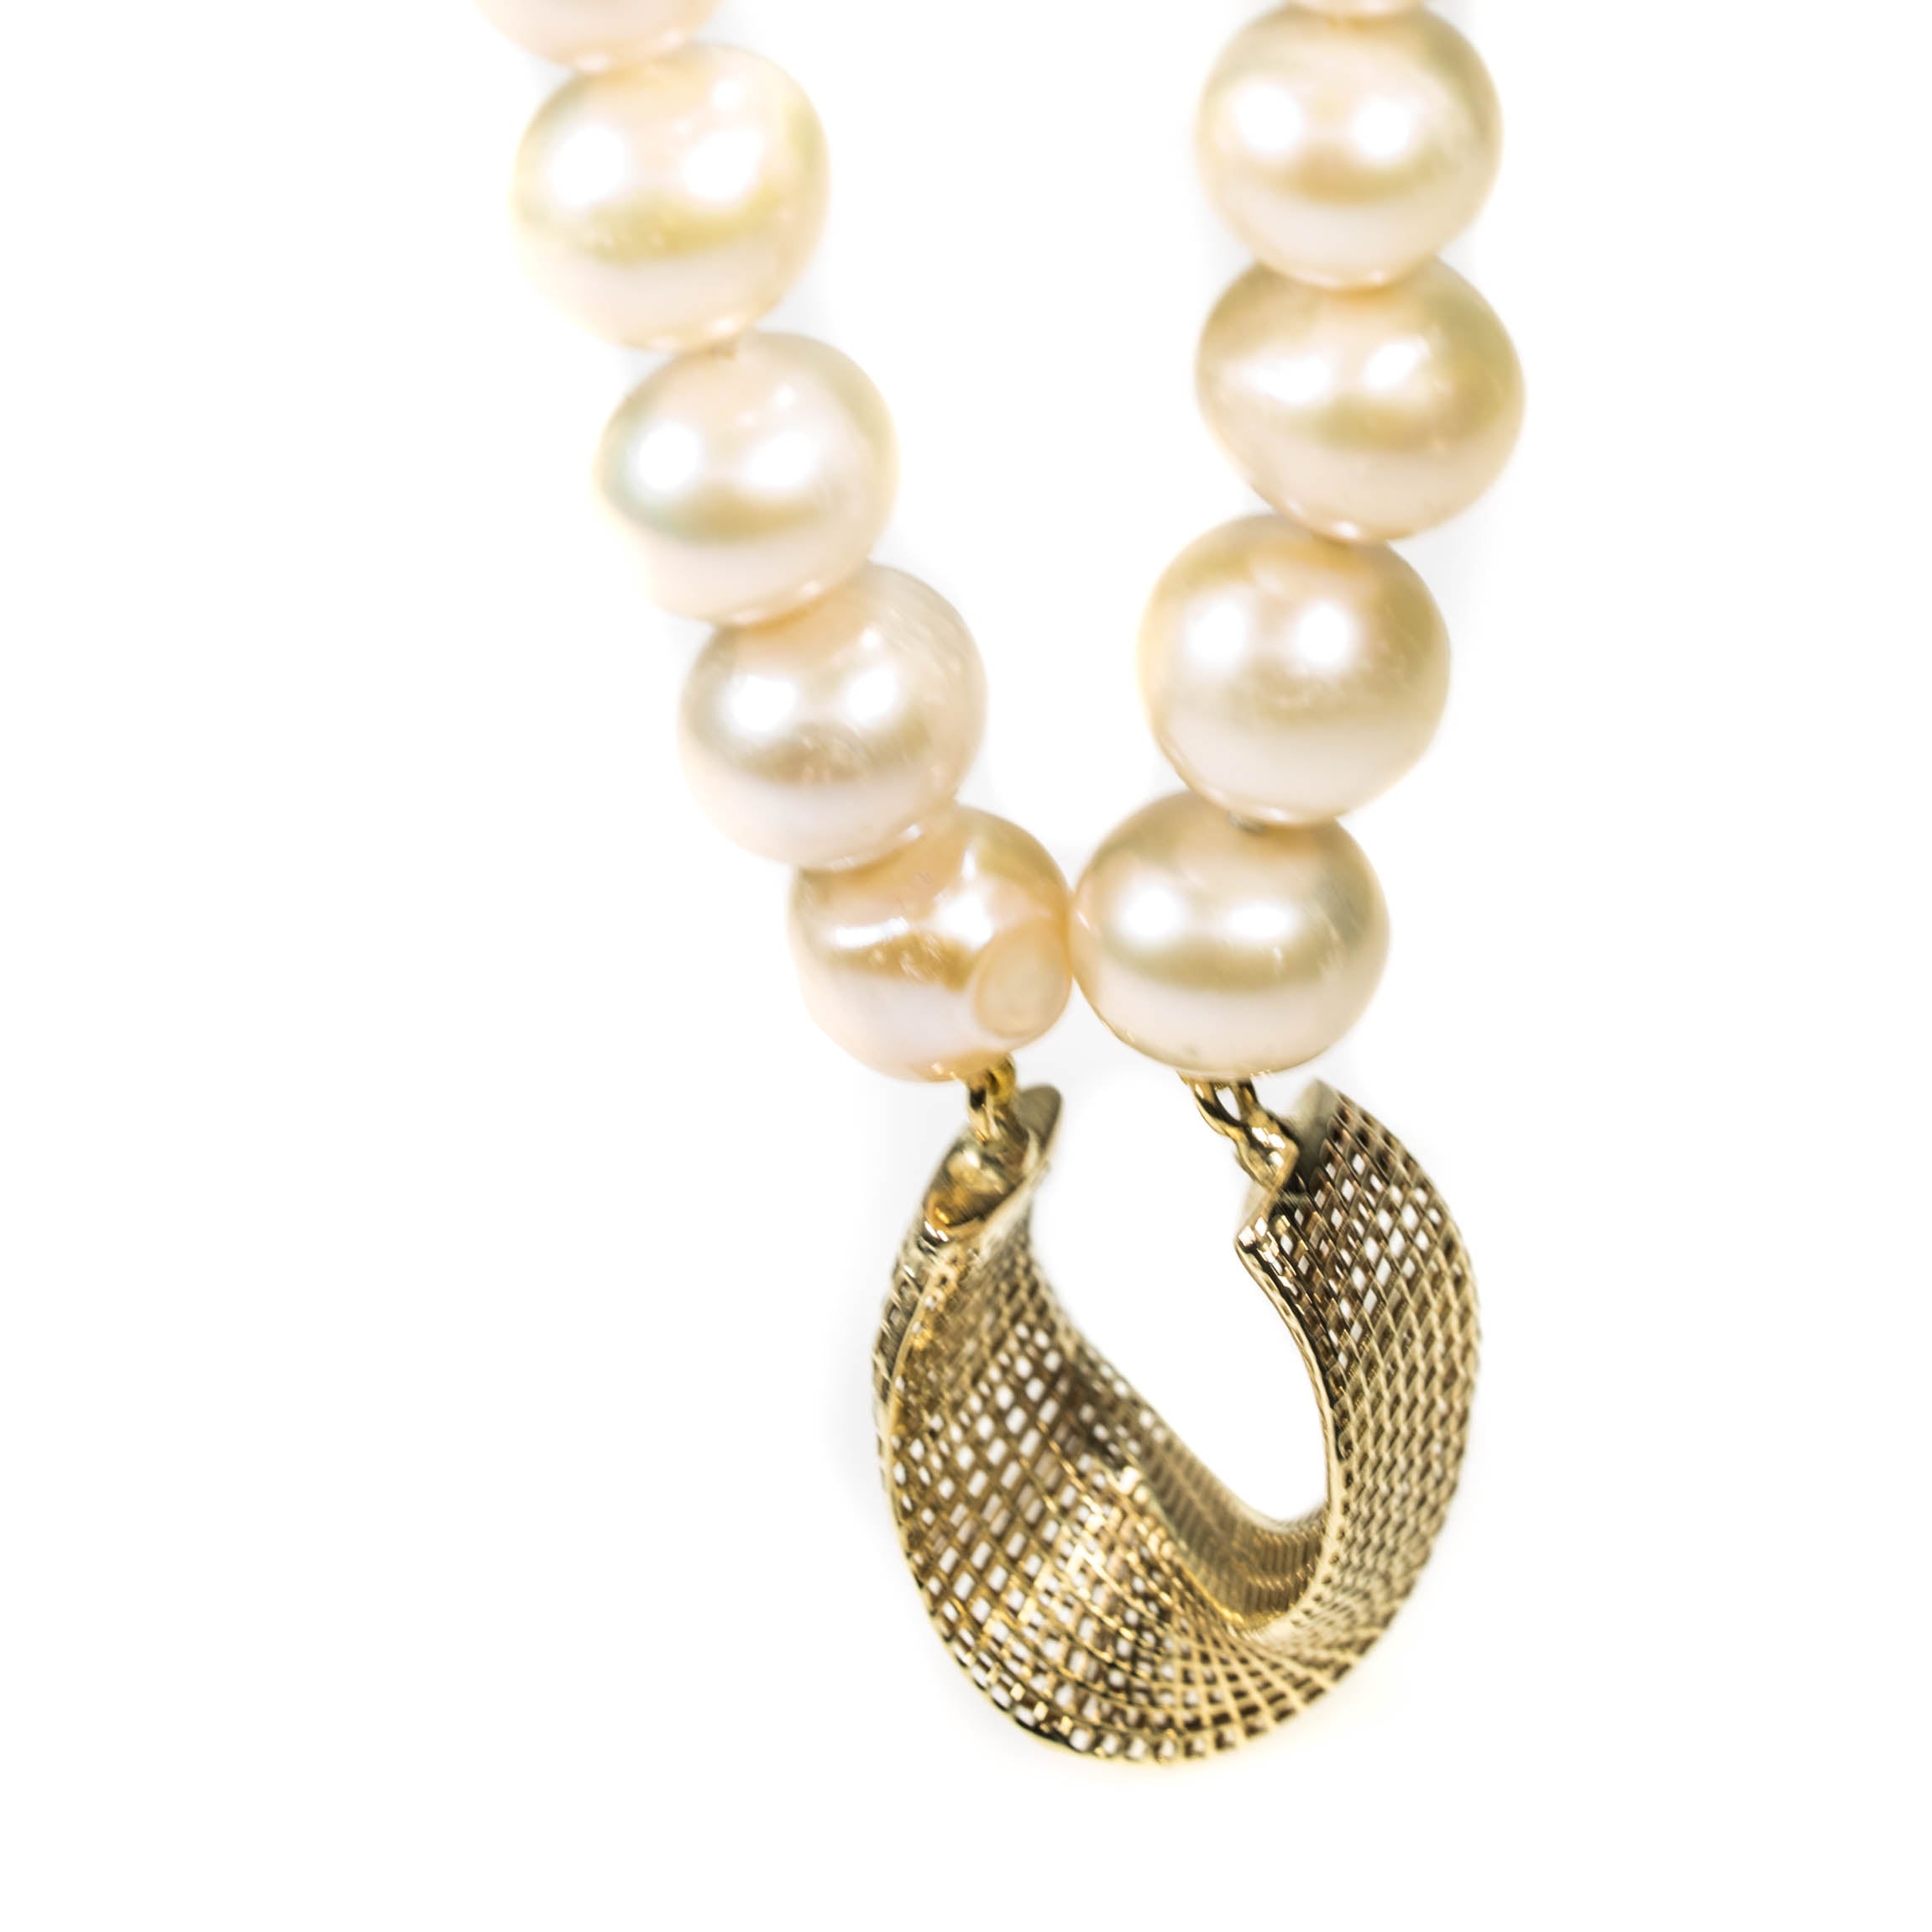 14K - Modern Freshwater Pearls Necklace - Net mobius center piece